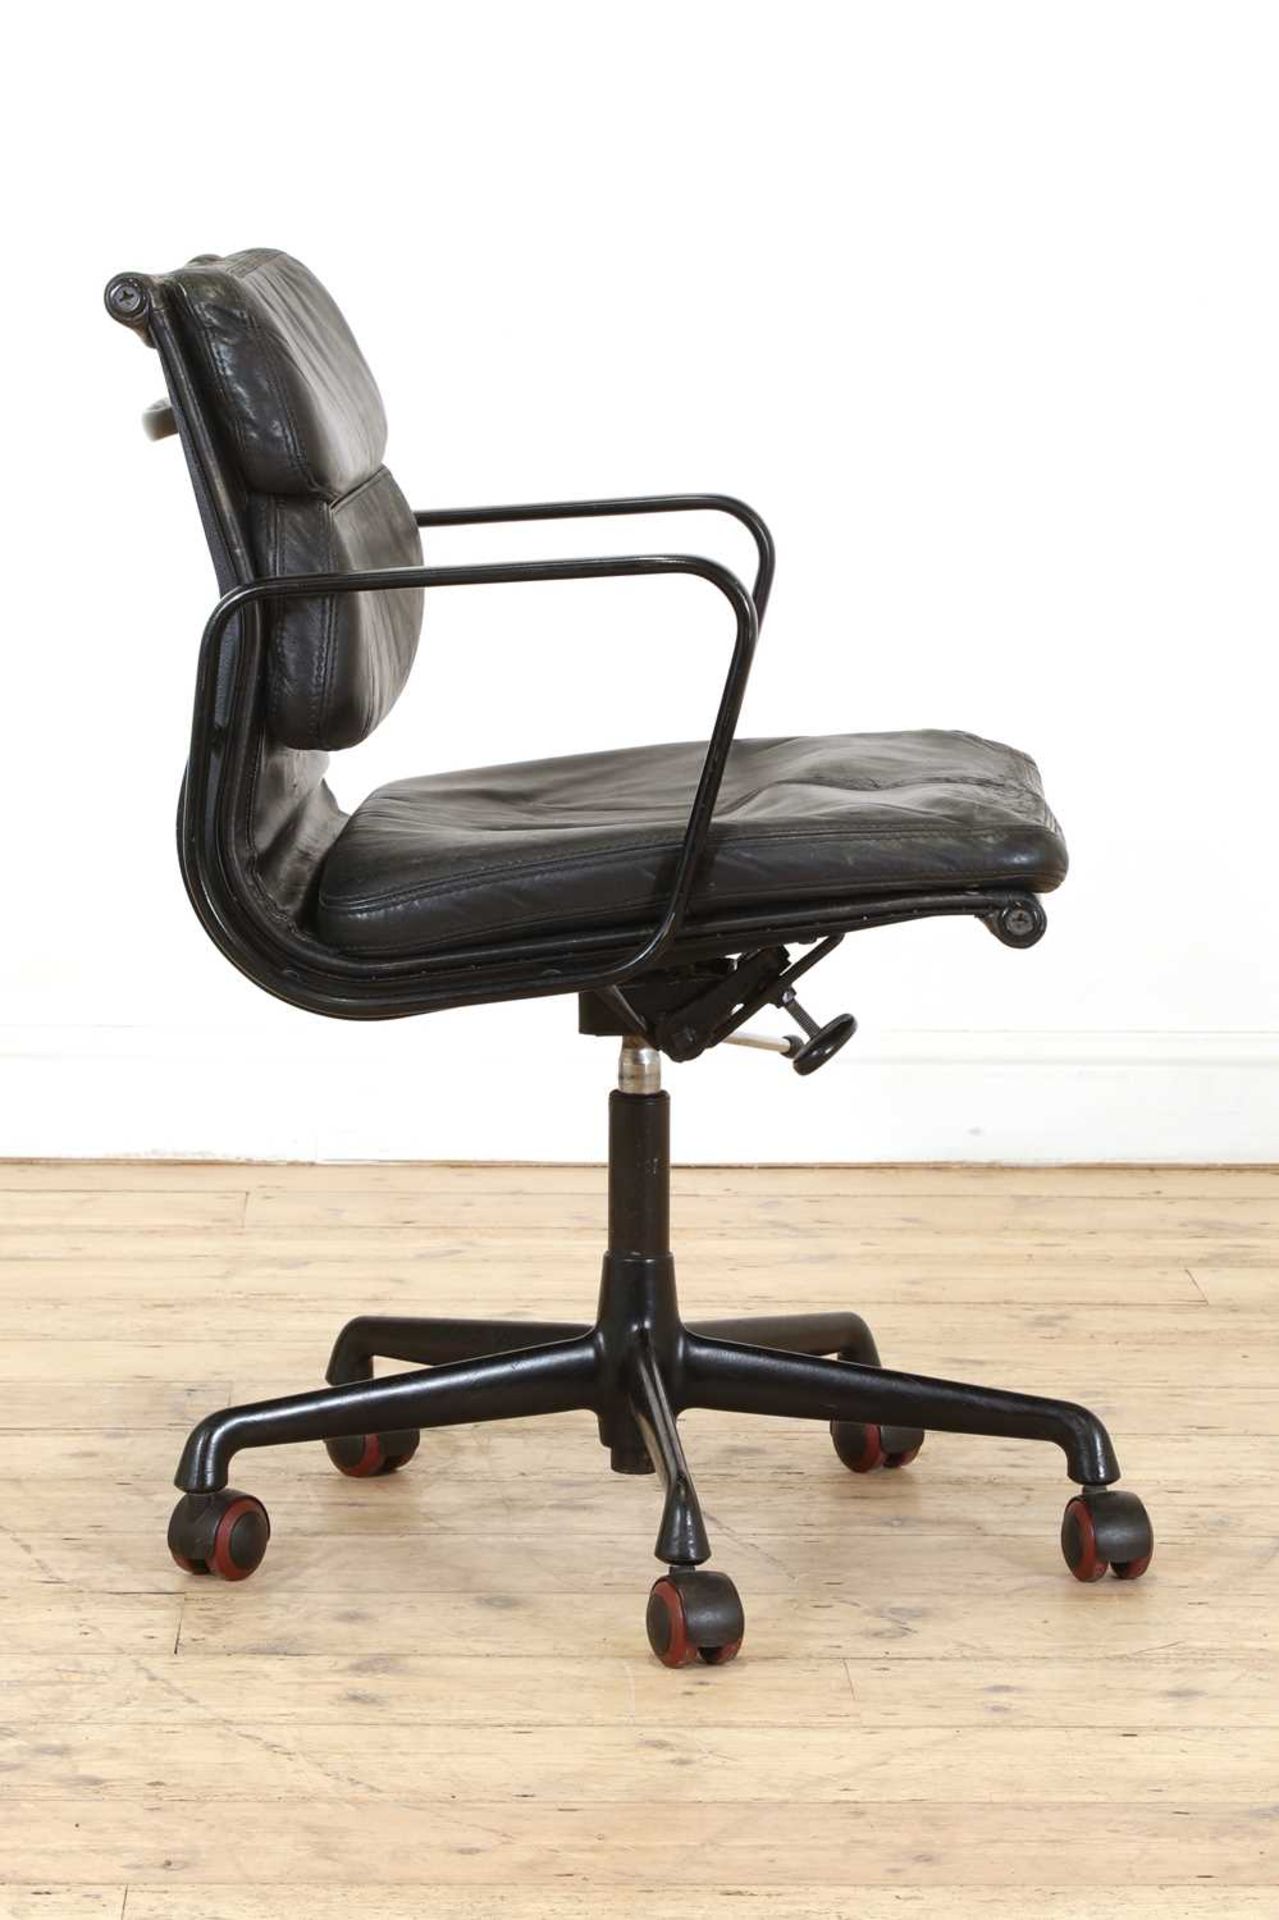 A Herman Miller International Vitra desk chair - Image 2 of 4